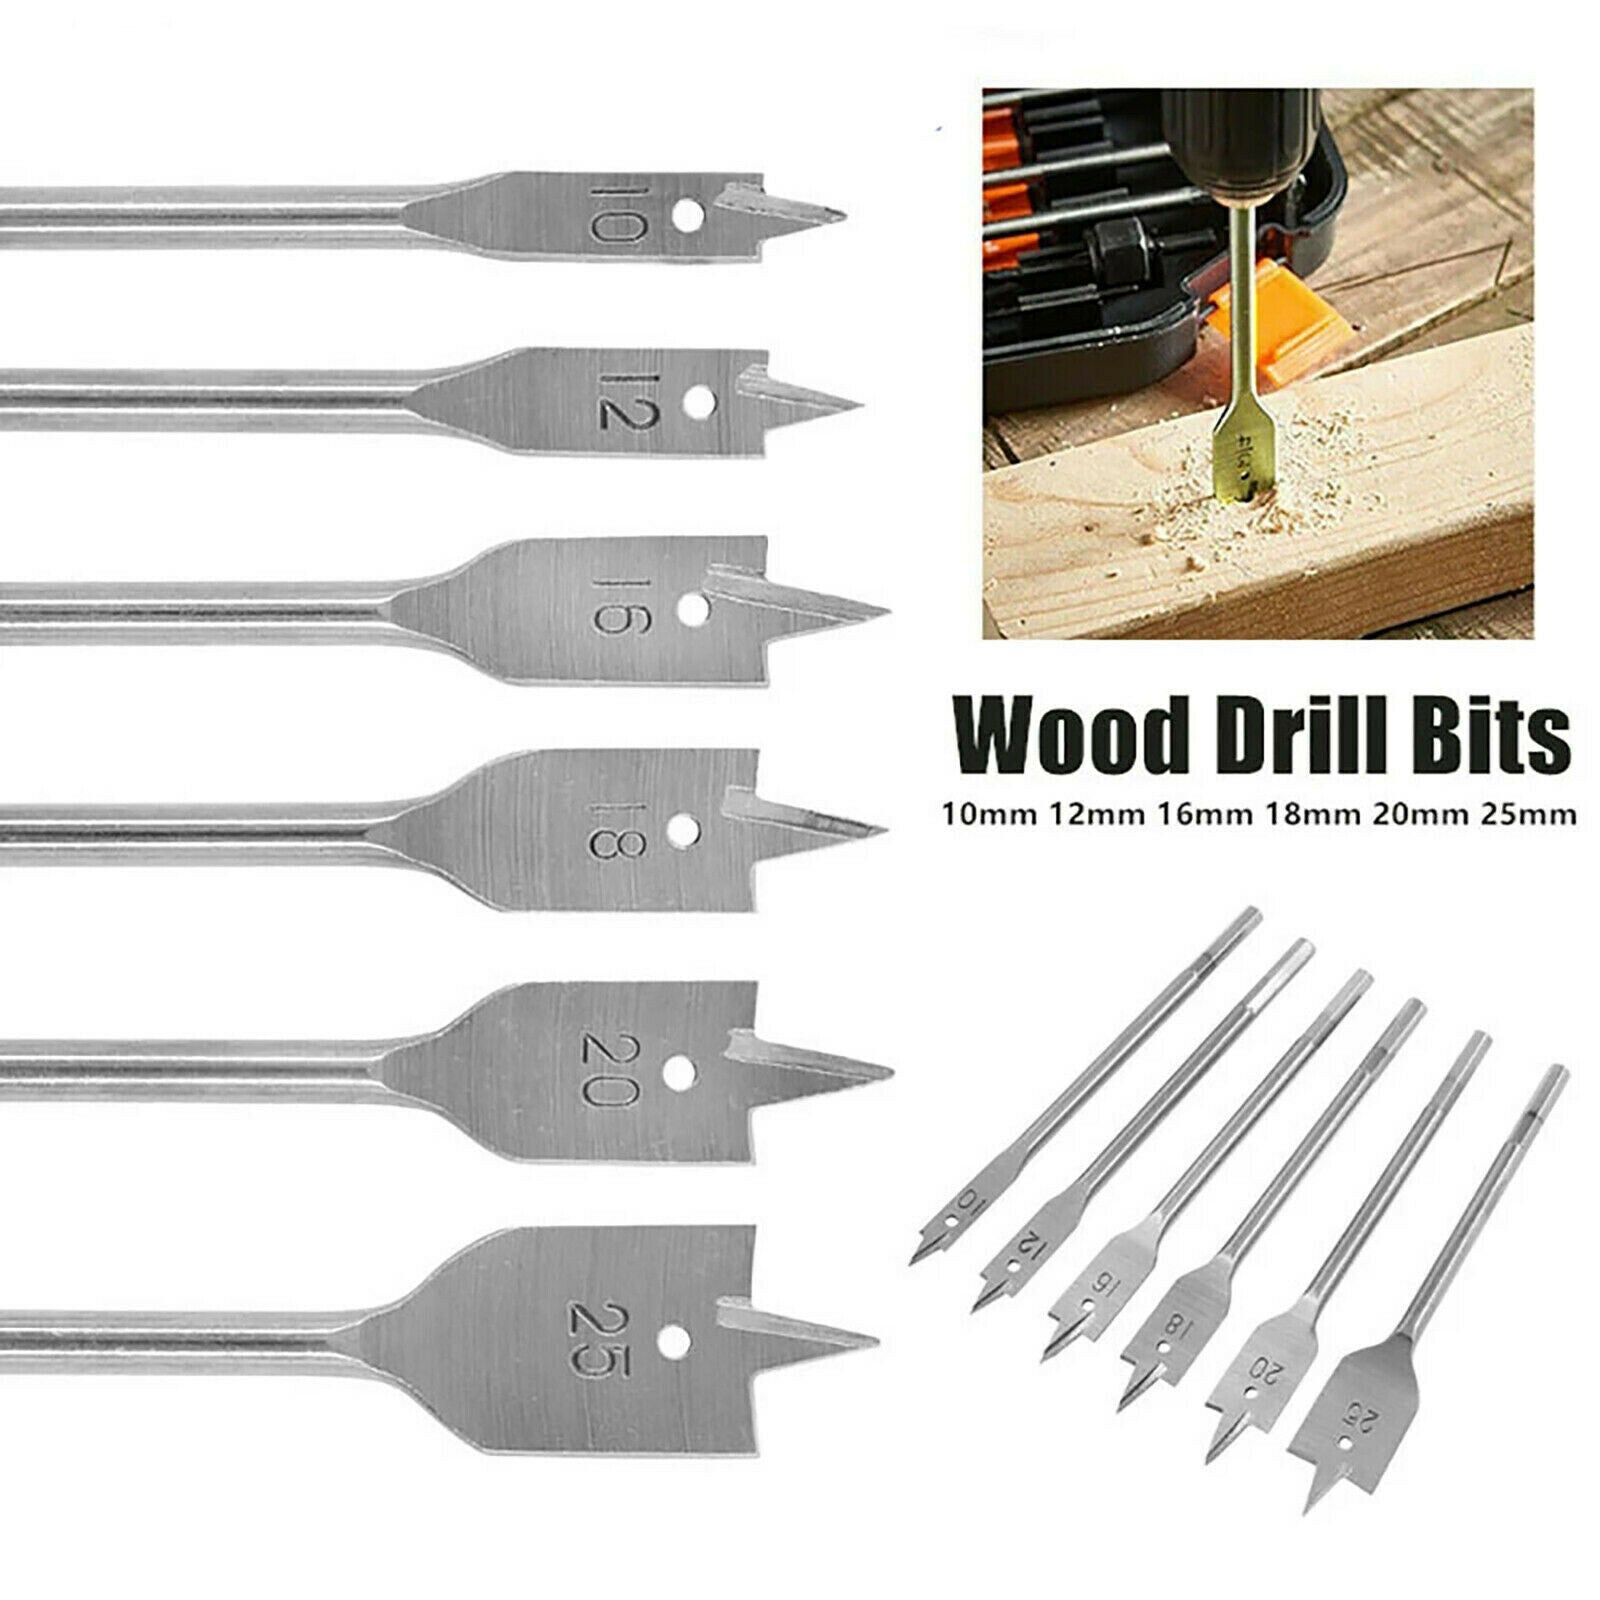 6PCS Flat Wood Boring Spade Drill Bit 10 12 16 18 20 25mm Bits Set 1/4" Shank